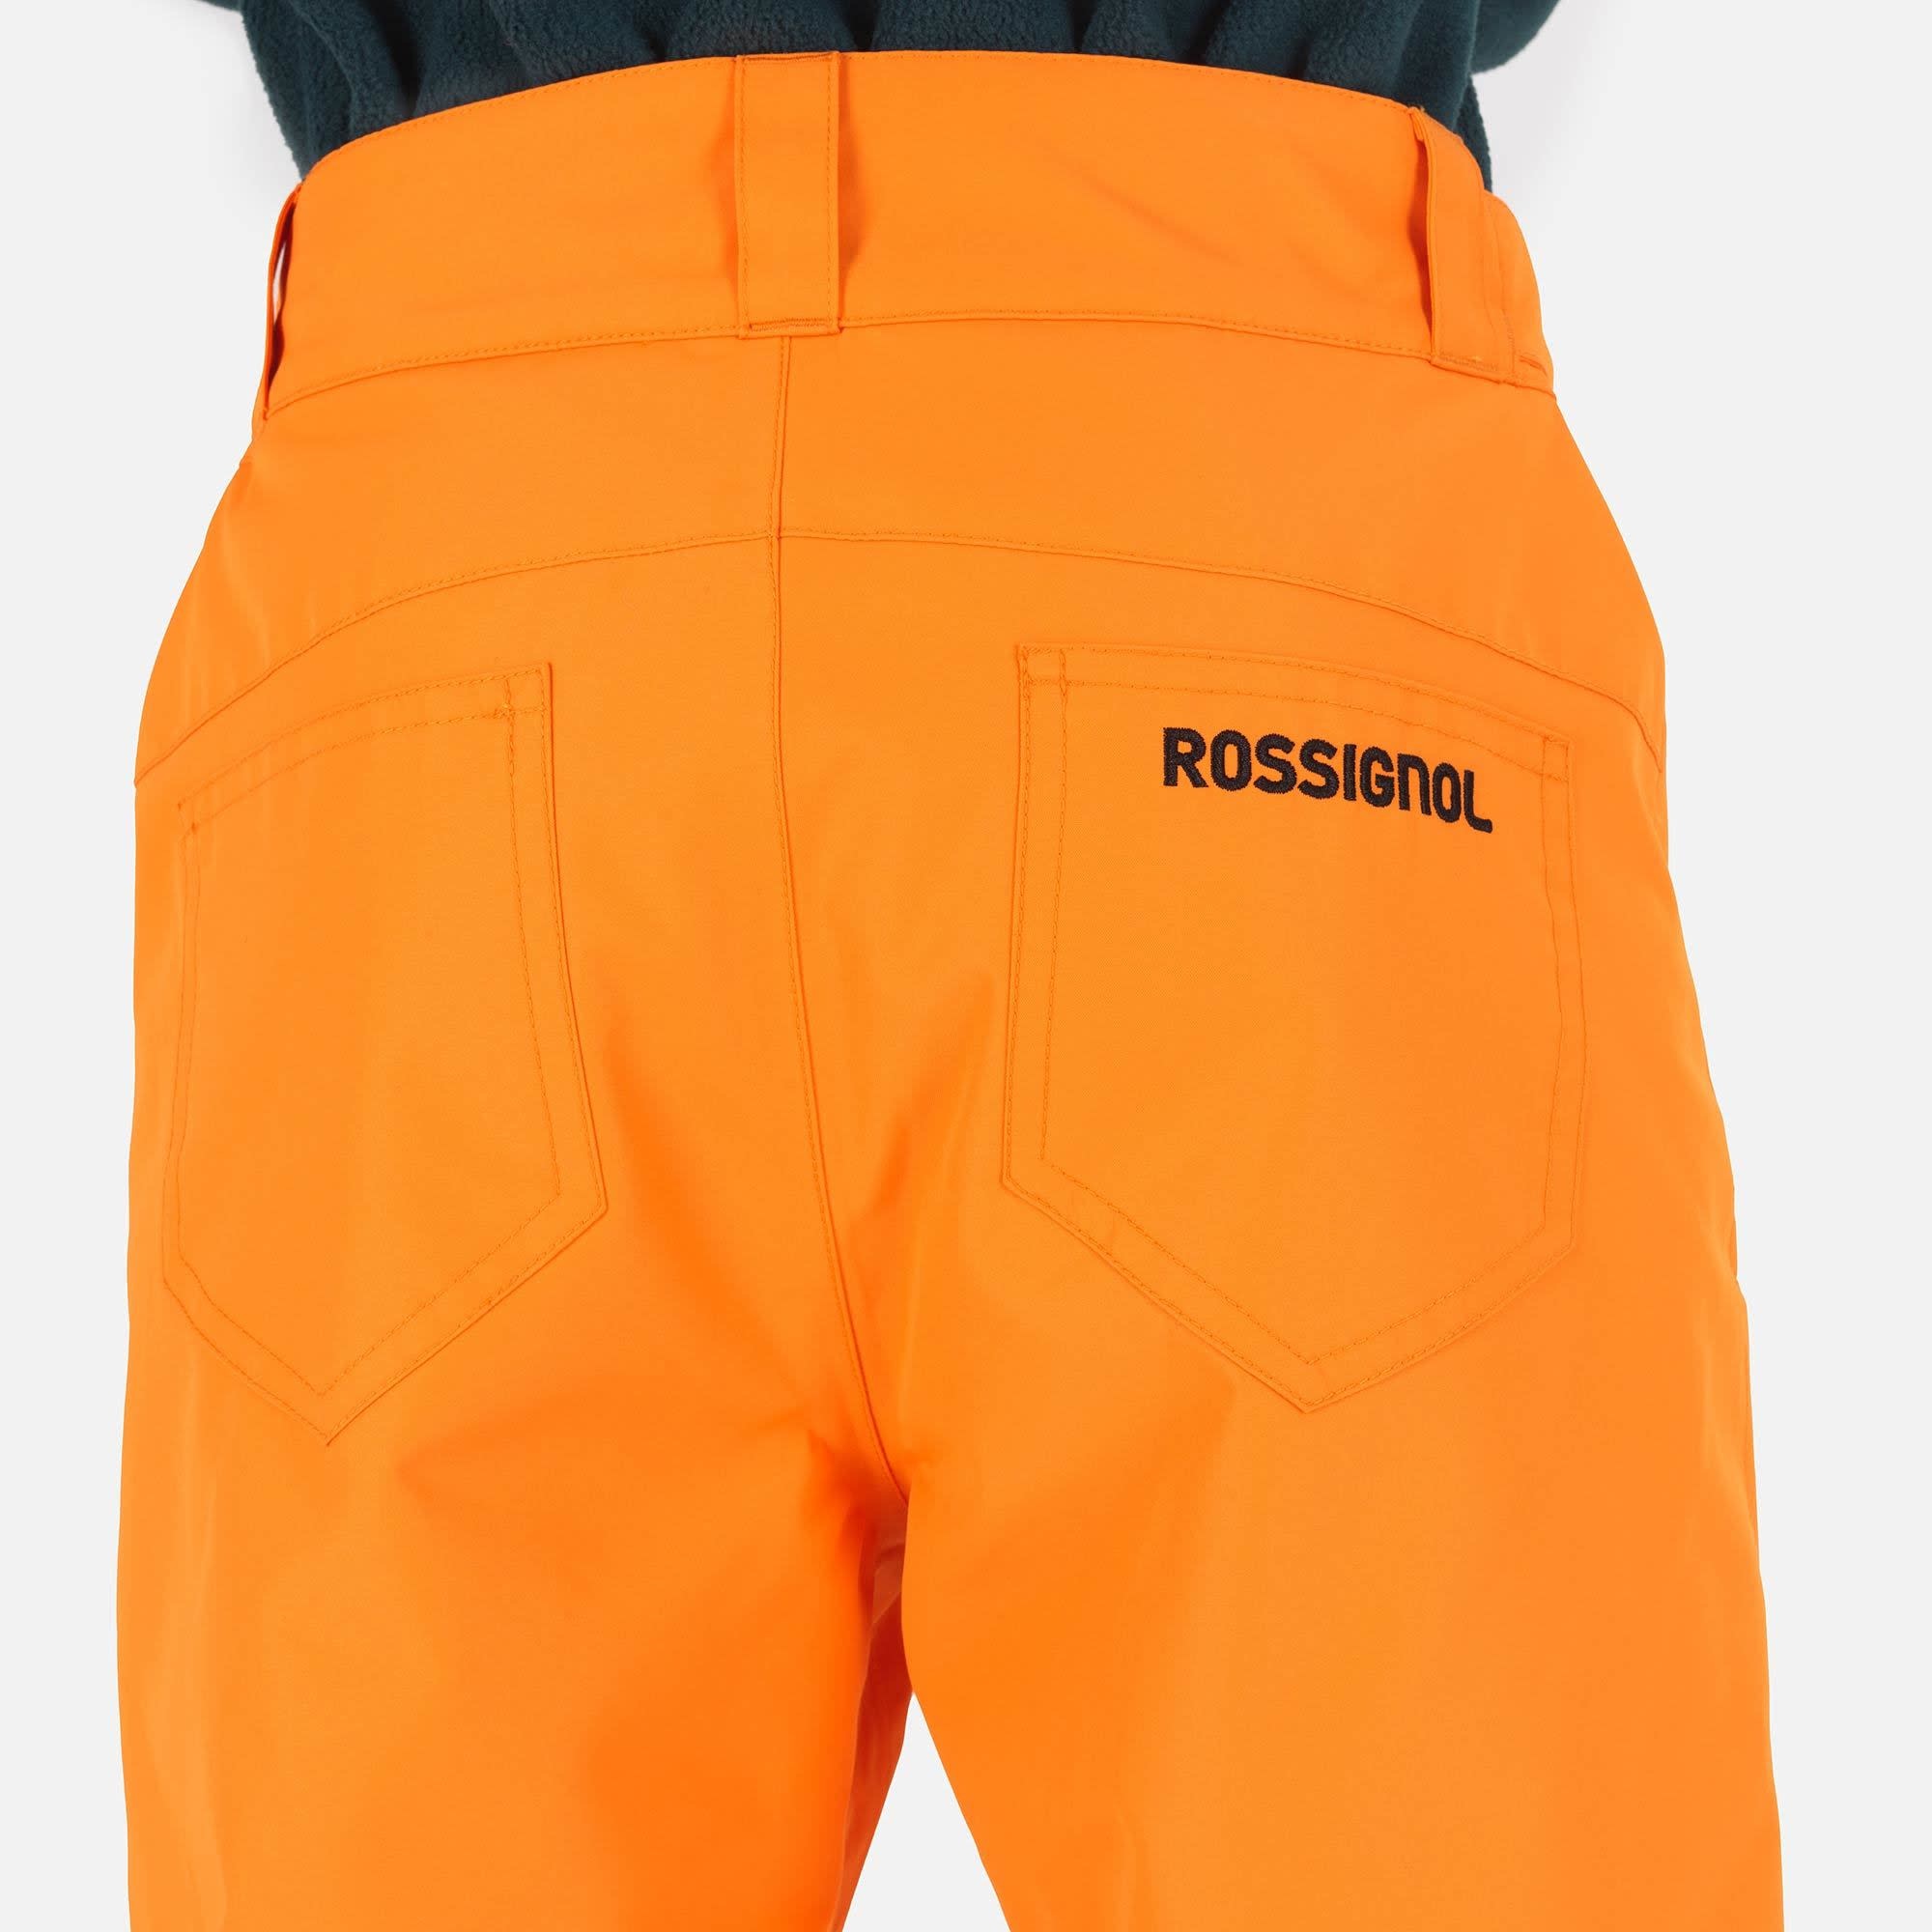 Rossignol Boy Ski Pant (22/23) 429